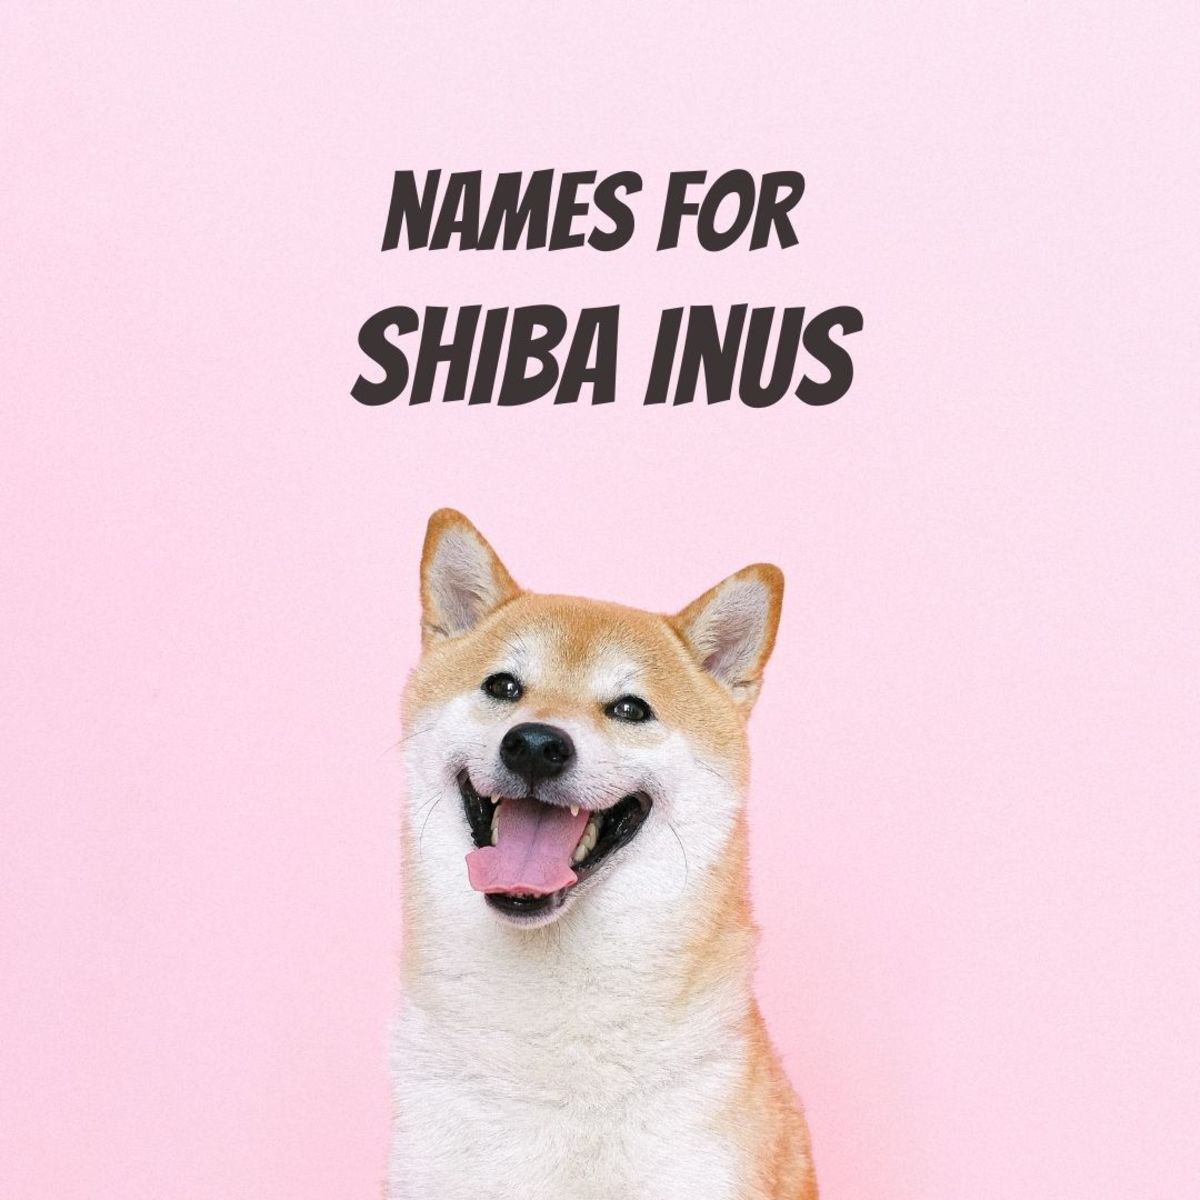 Cute Shiba Inu name ideas